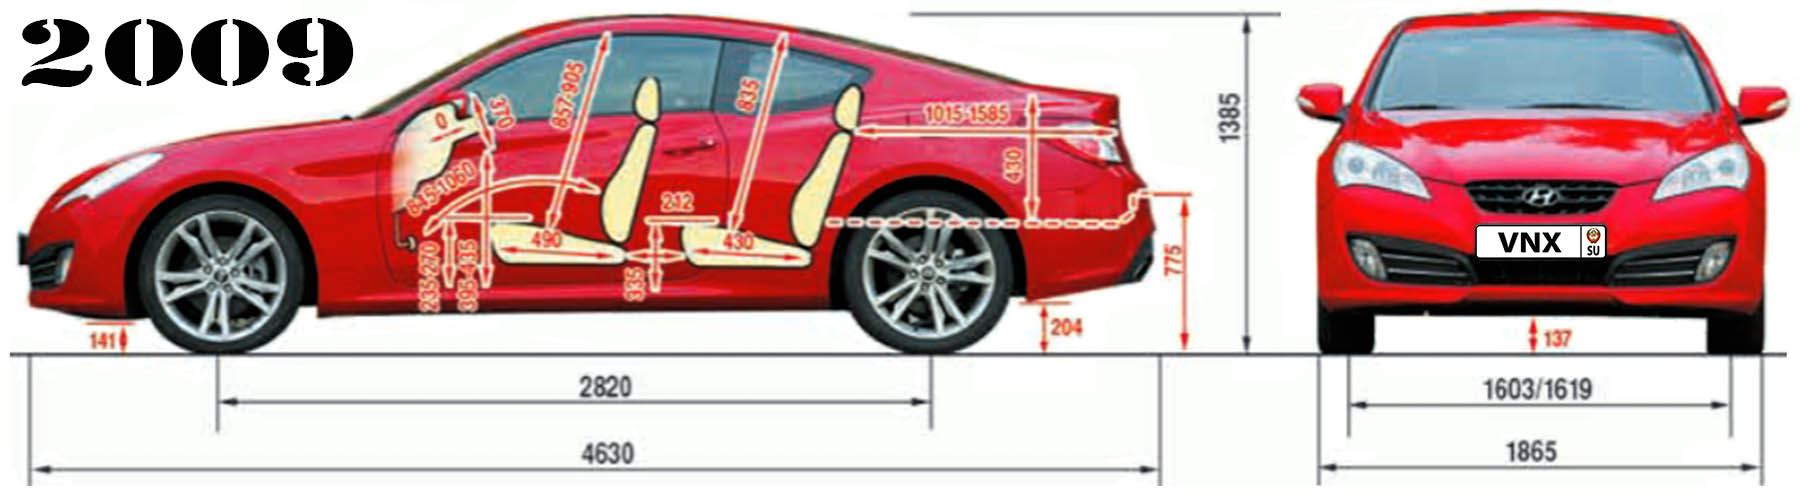 Габаритные размеры Хёндэ Генезис Купе 2009 (dimensions Hyundai Genesis Coupe)